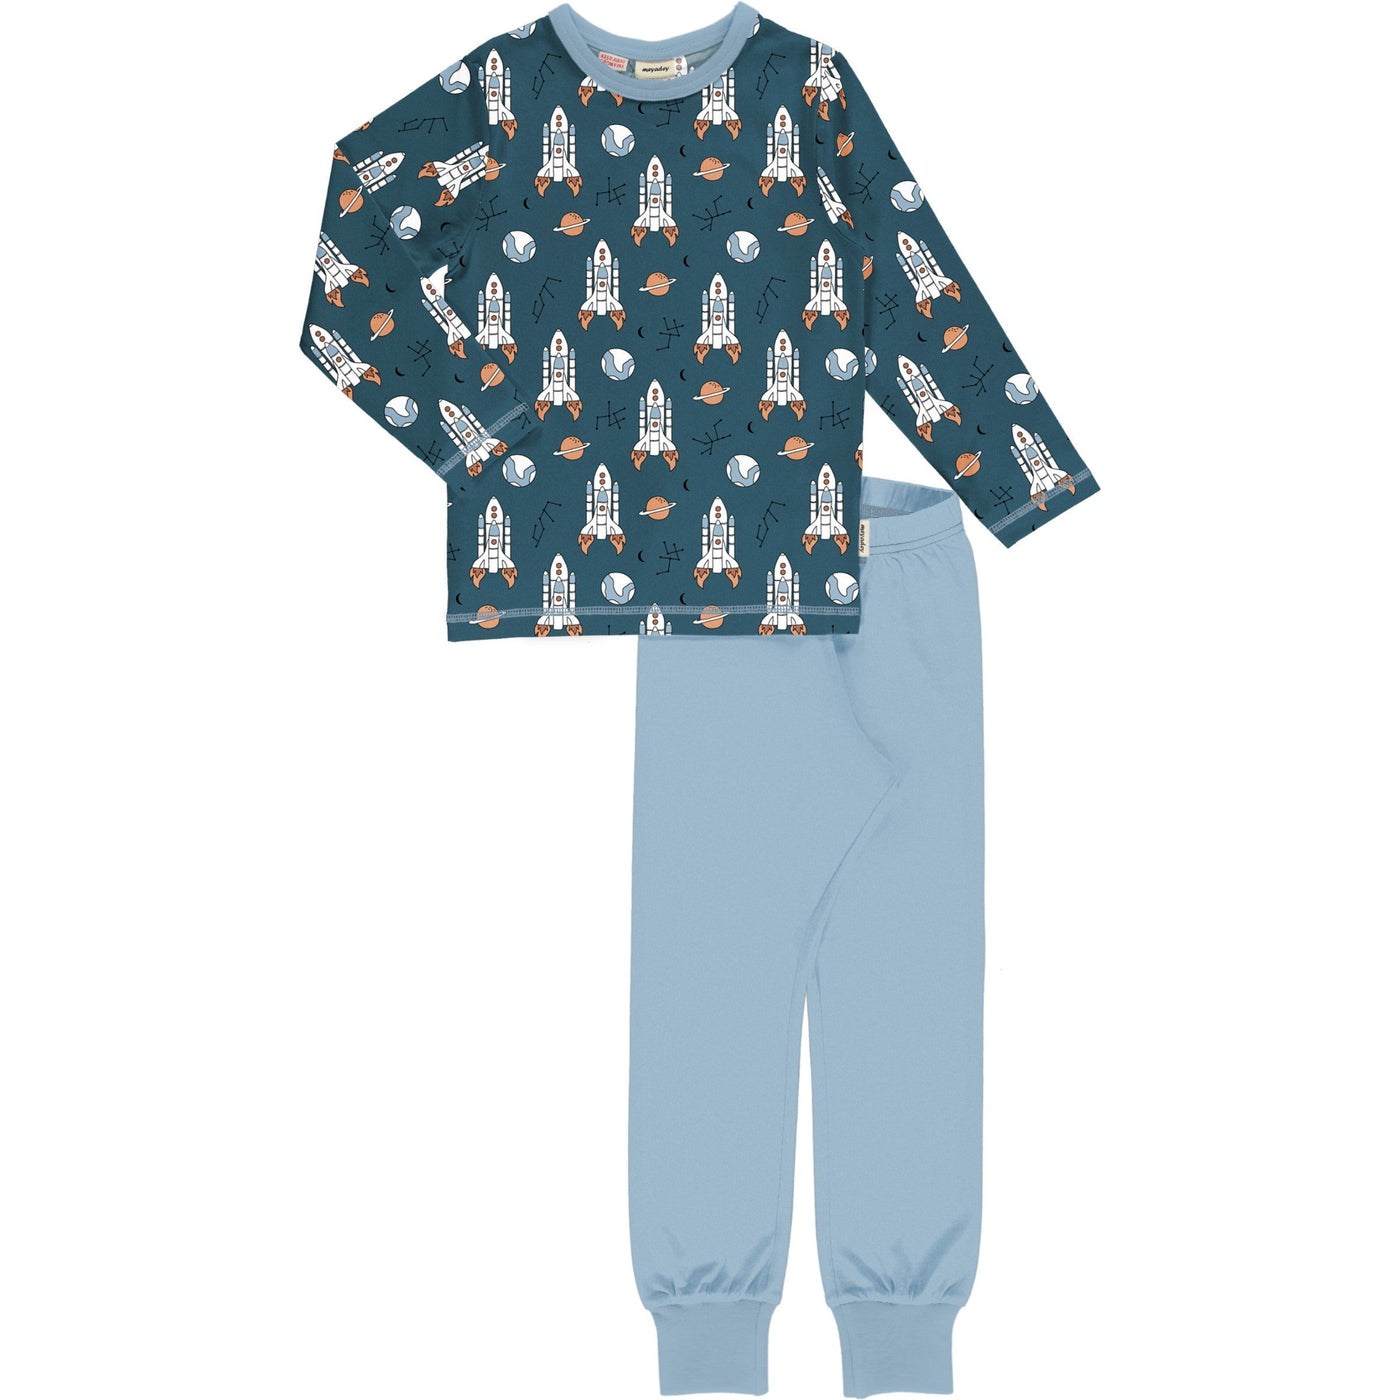 Meyaday Pyjama Set - Ready To Take Off (9-12 Months)